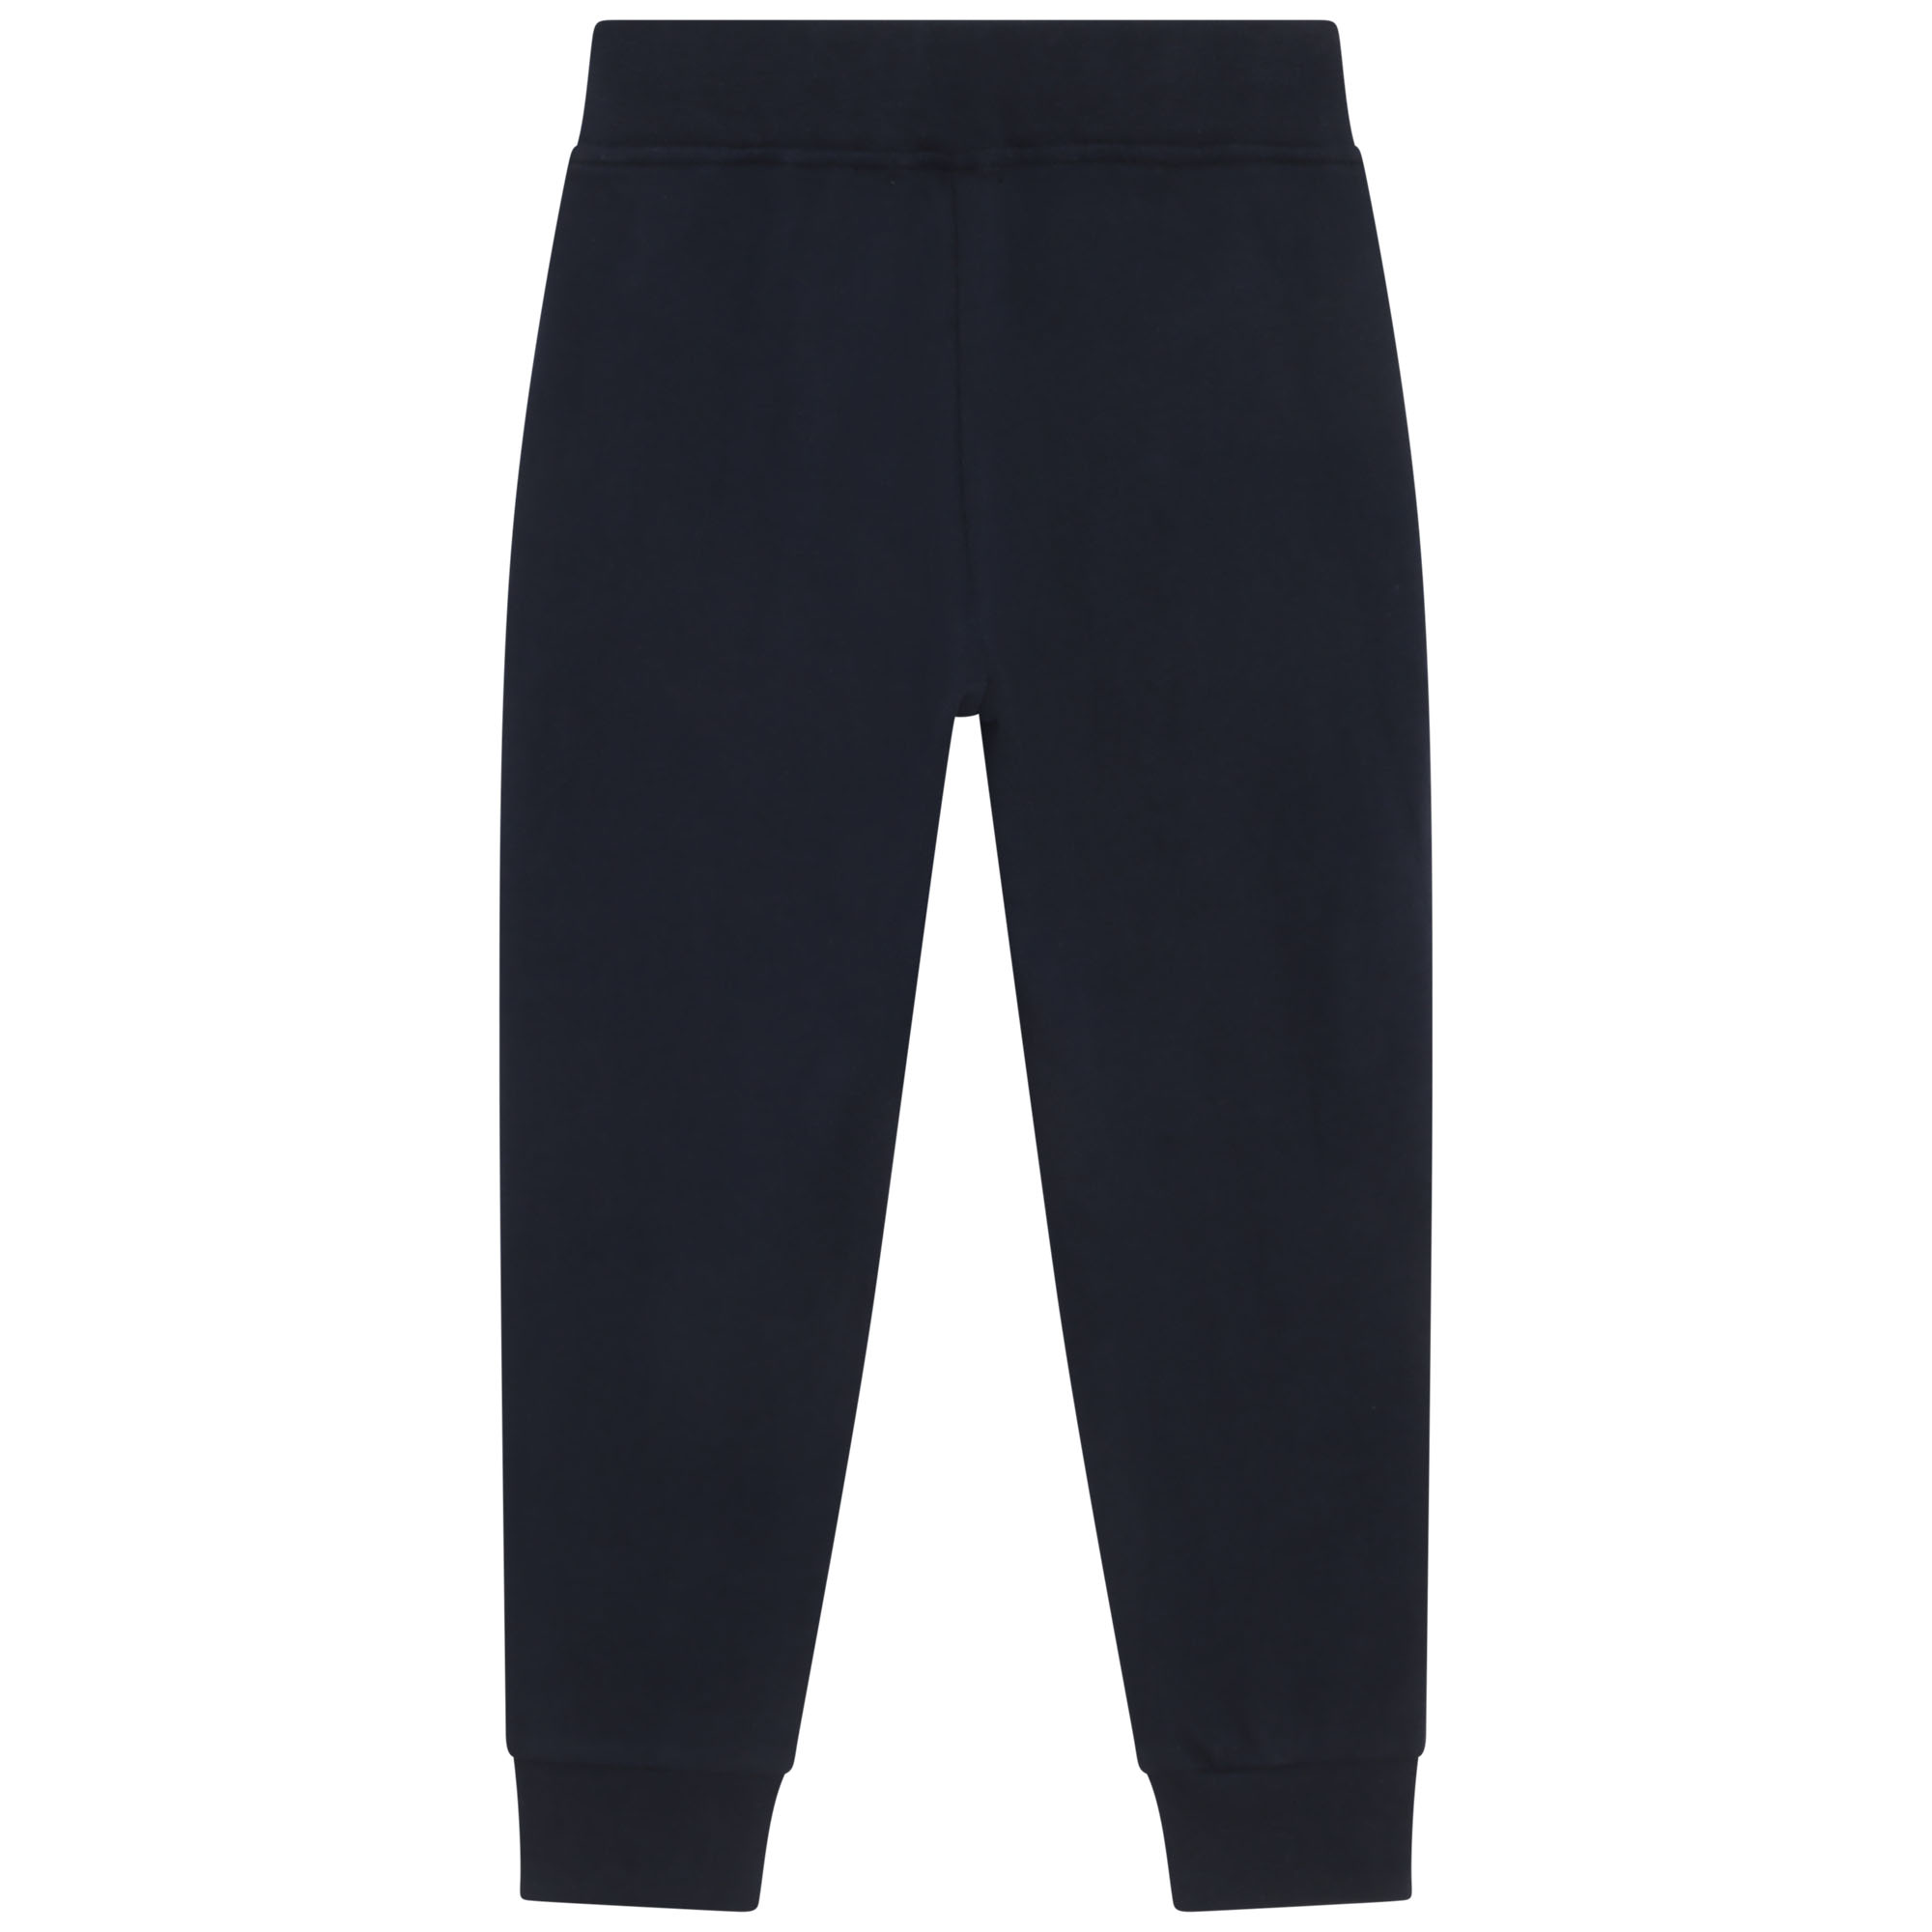 Fleece jogging trousers AIGLE for UNISEX